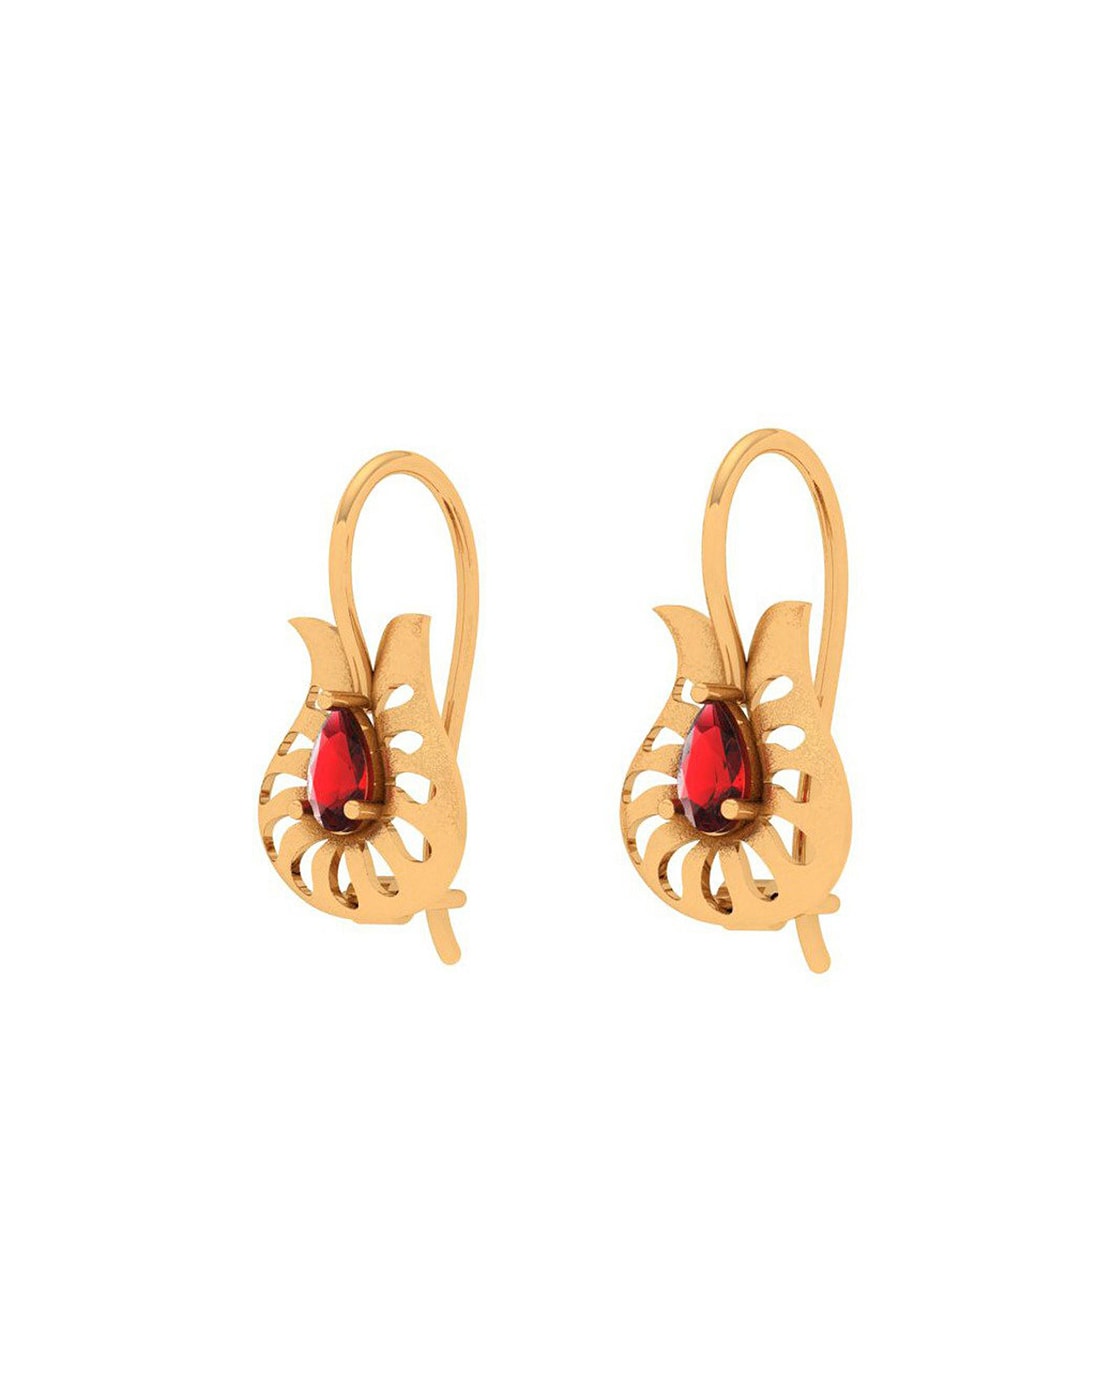 Discover more than 182 8 gram earrings super hot